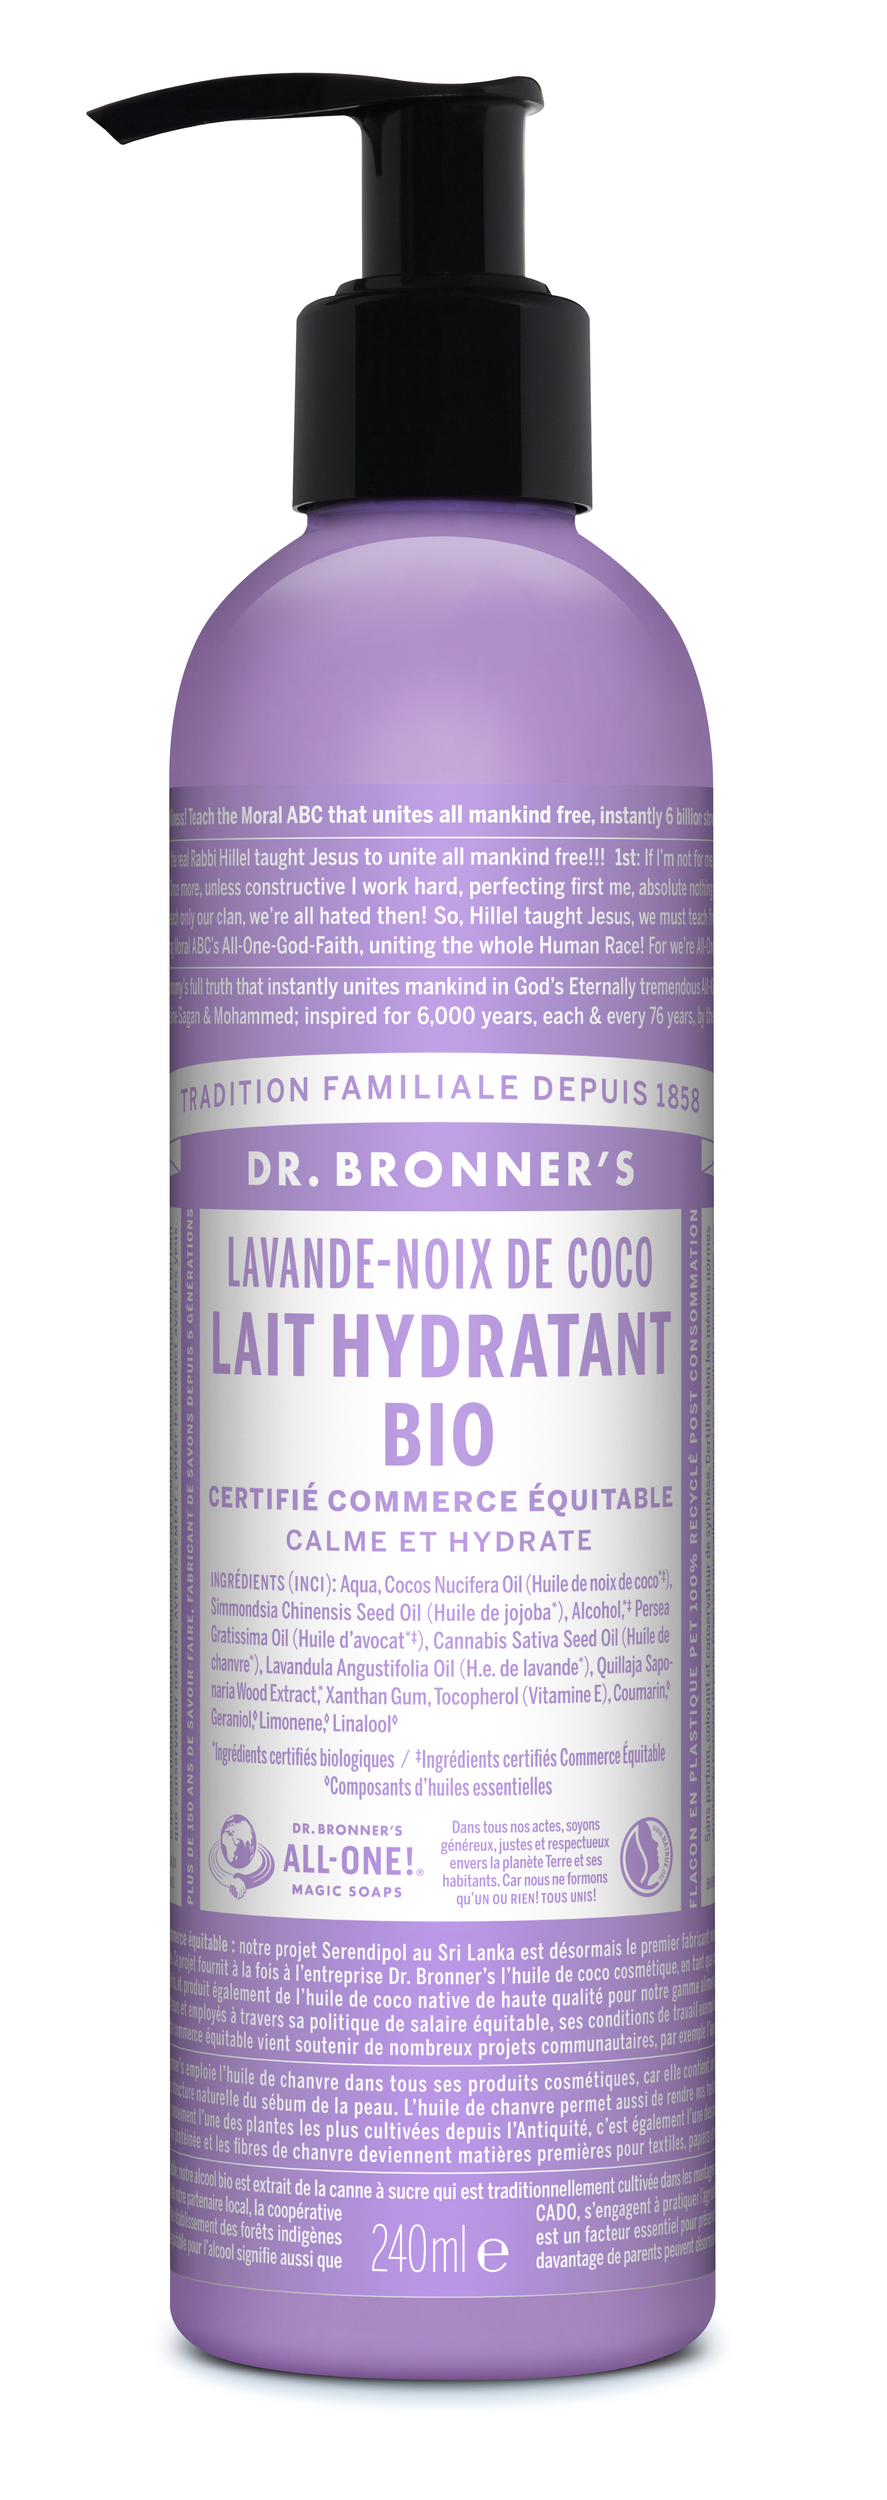 lait hydratant vegan lavande coco dr bronner's veganame